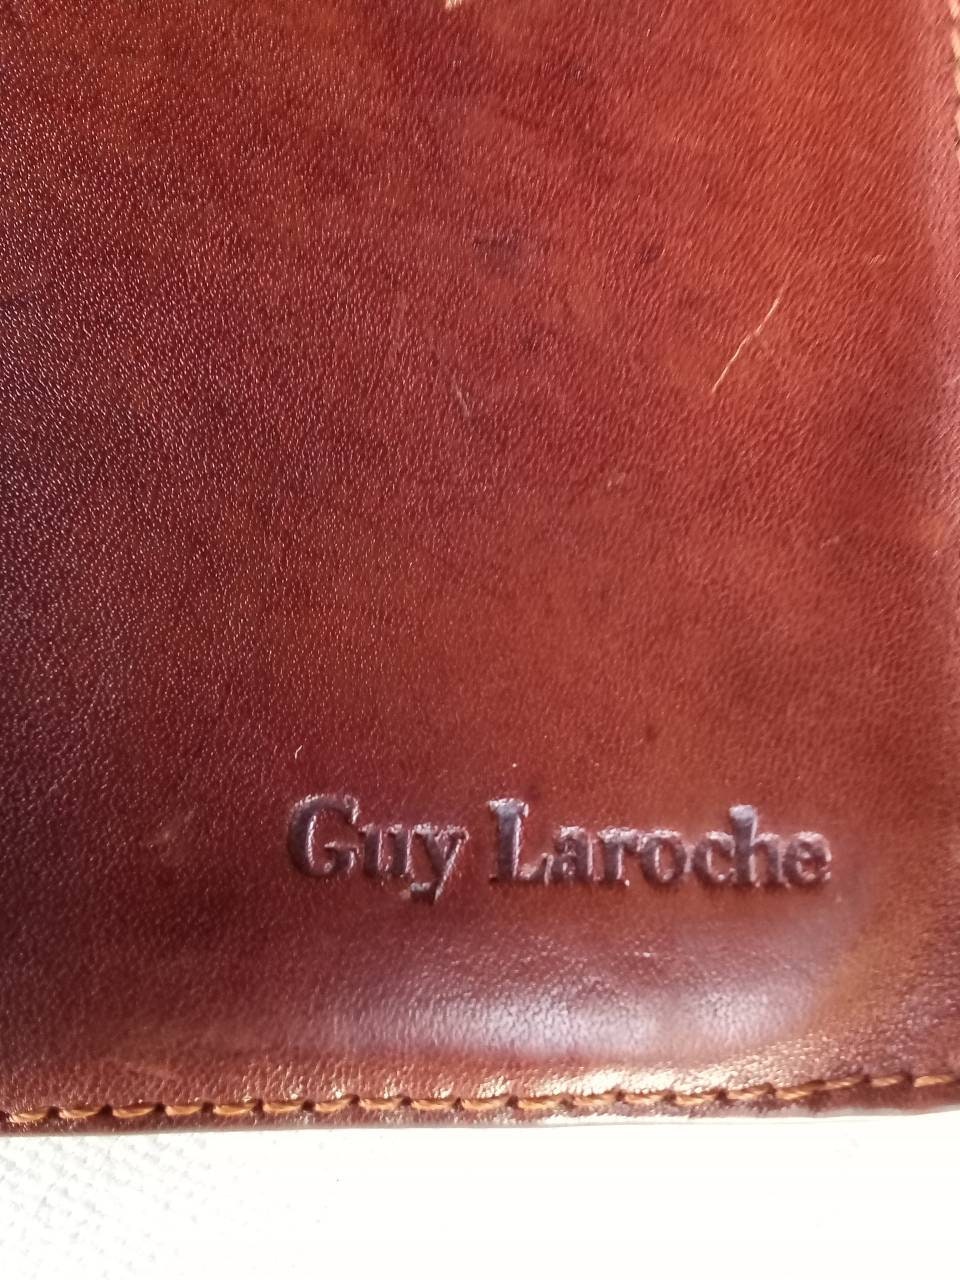 Authentic Guy Laroche bag